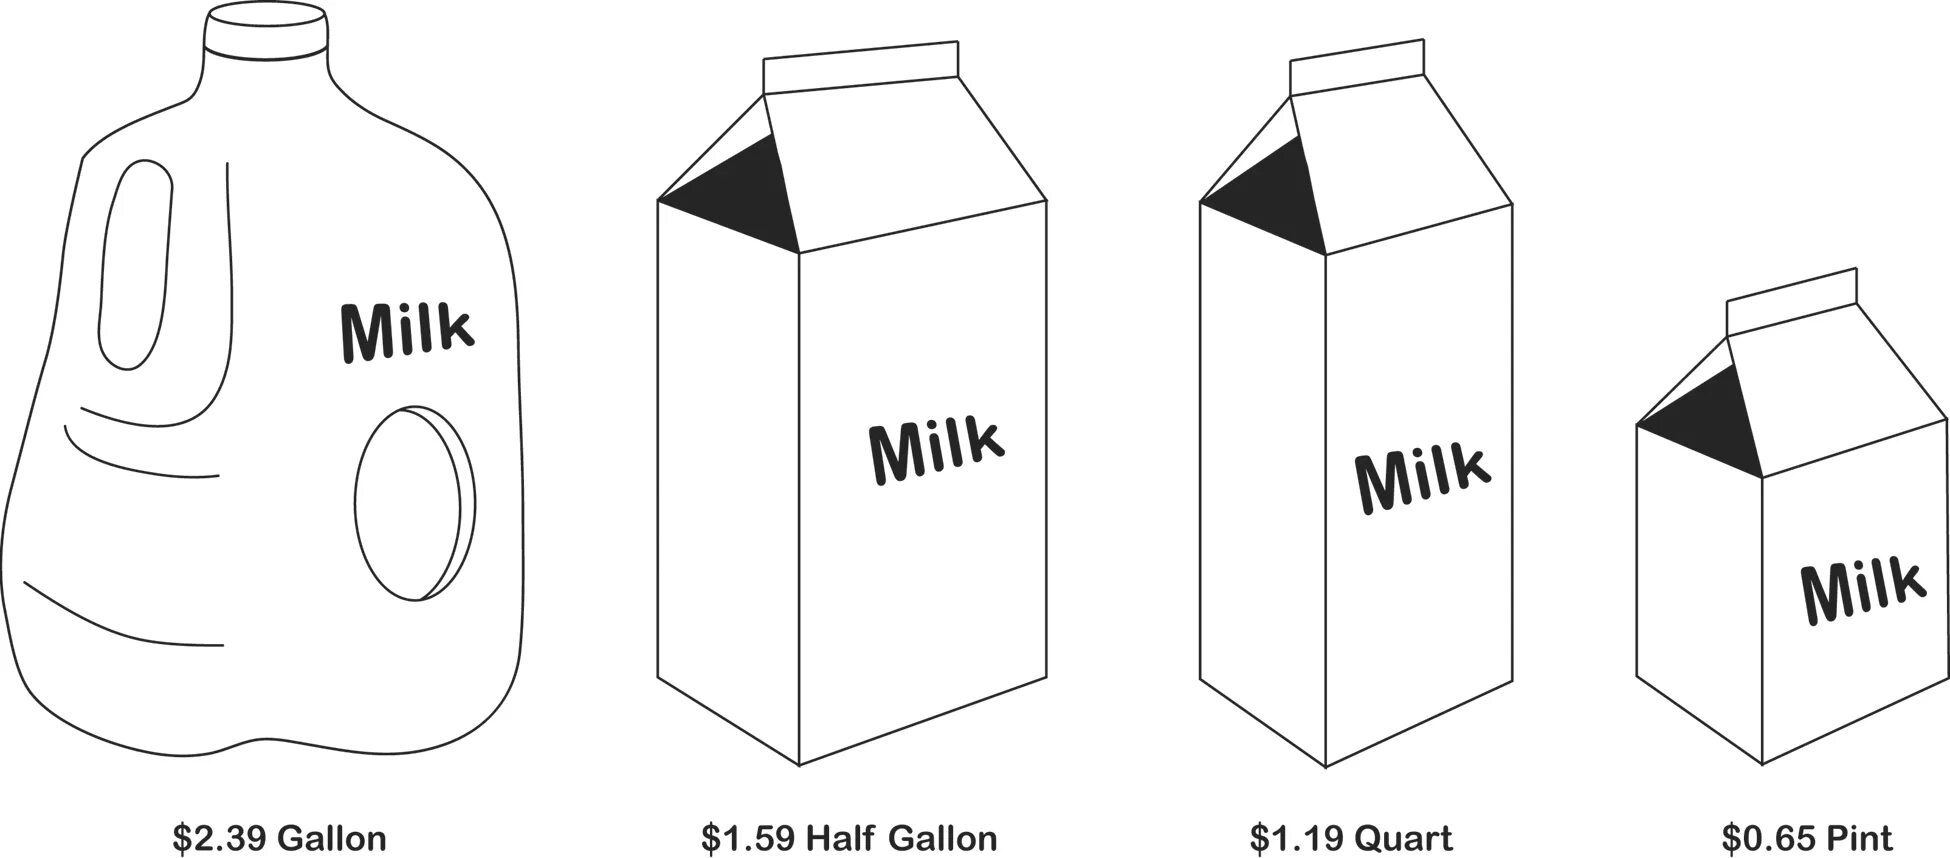 Галлон. Галлон молока. Галлон в литры. Галлон молока в литрах. Скольким литрам равен галлон